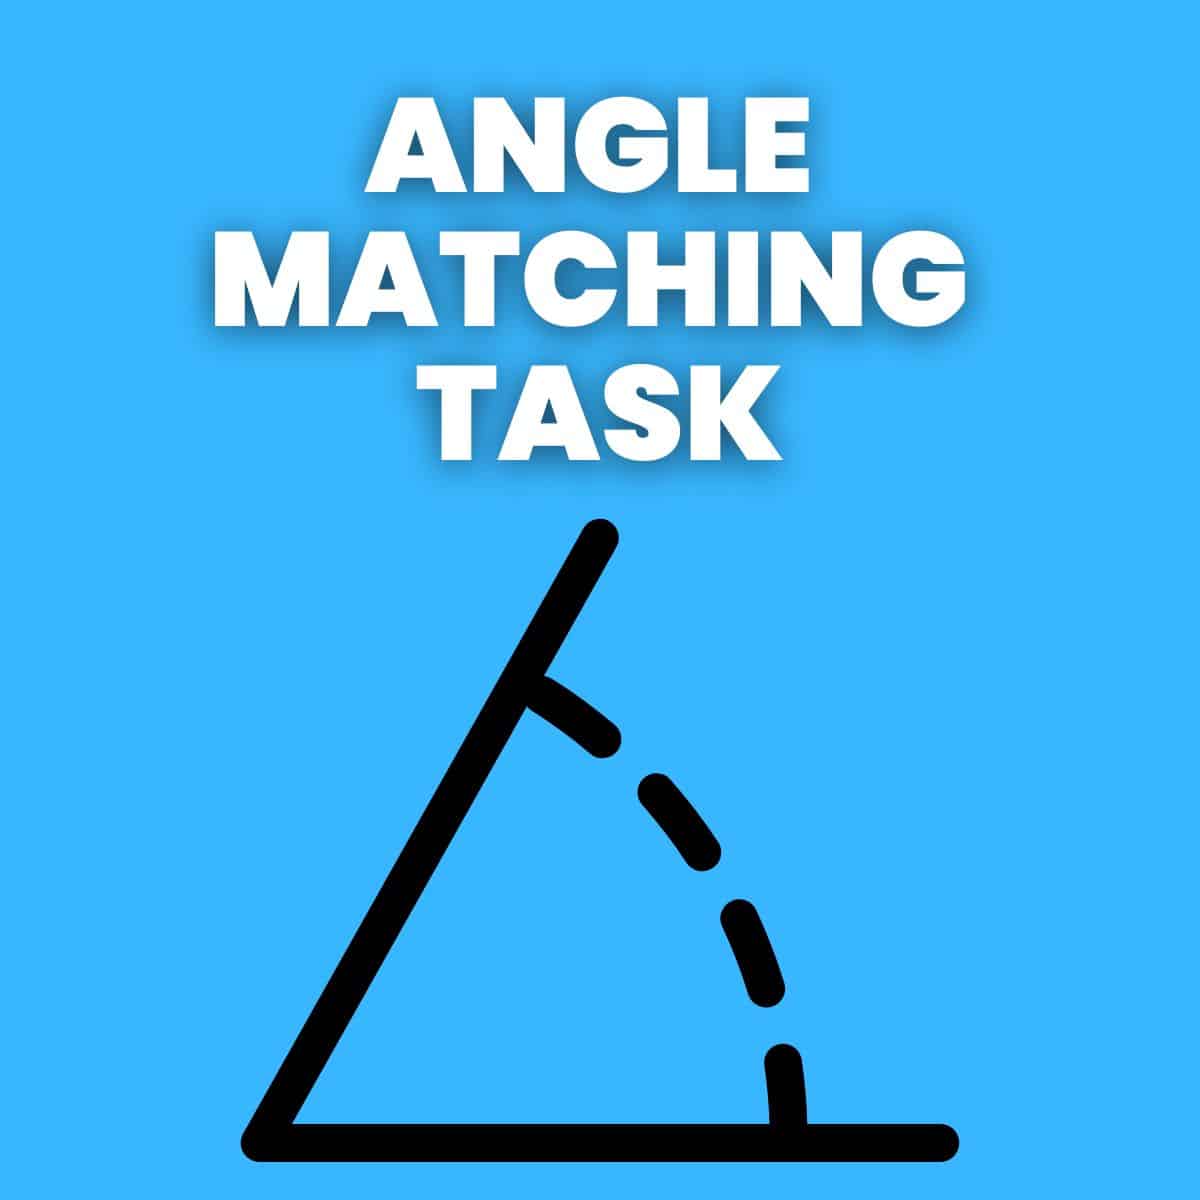 drawing of angle with text "angle matching task" 